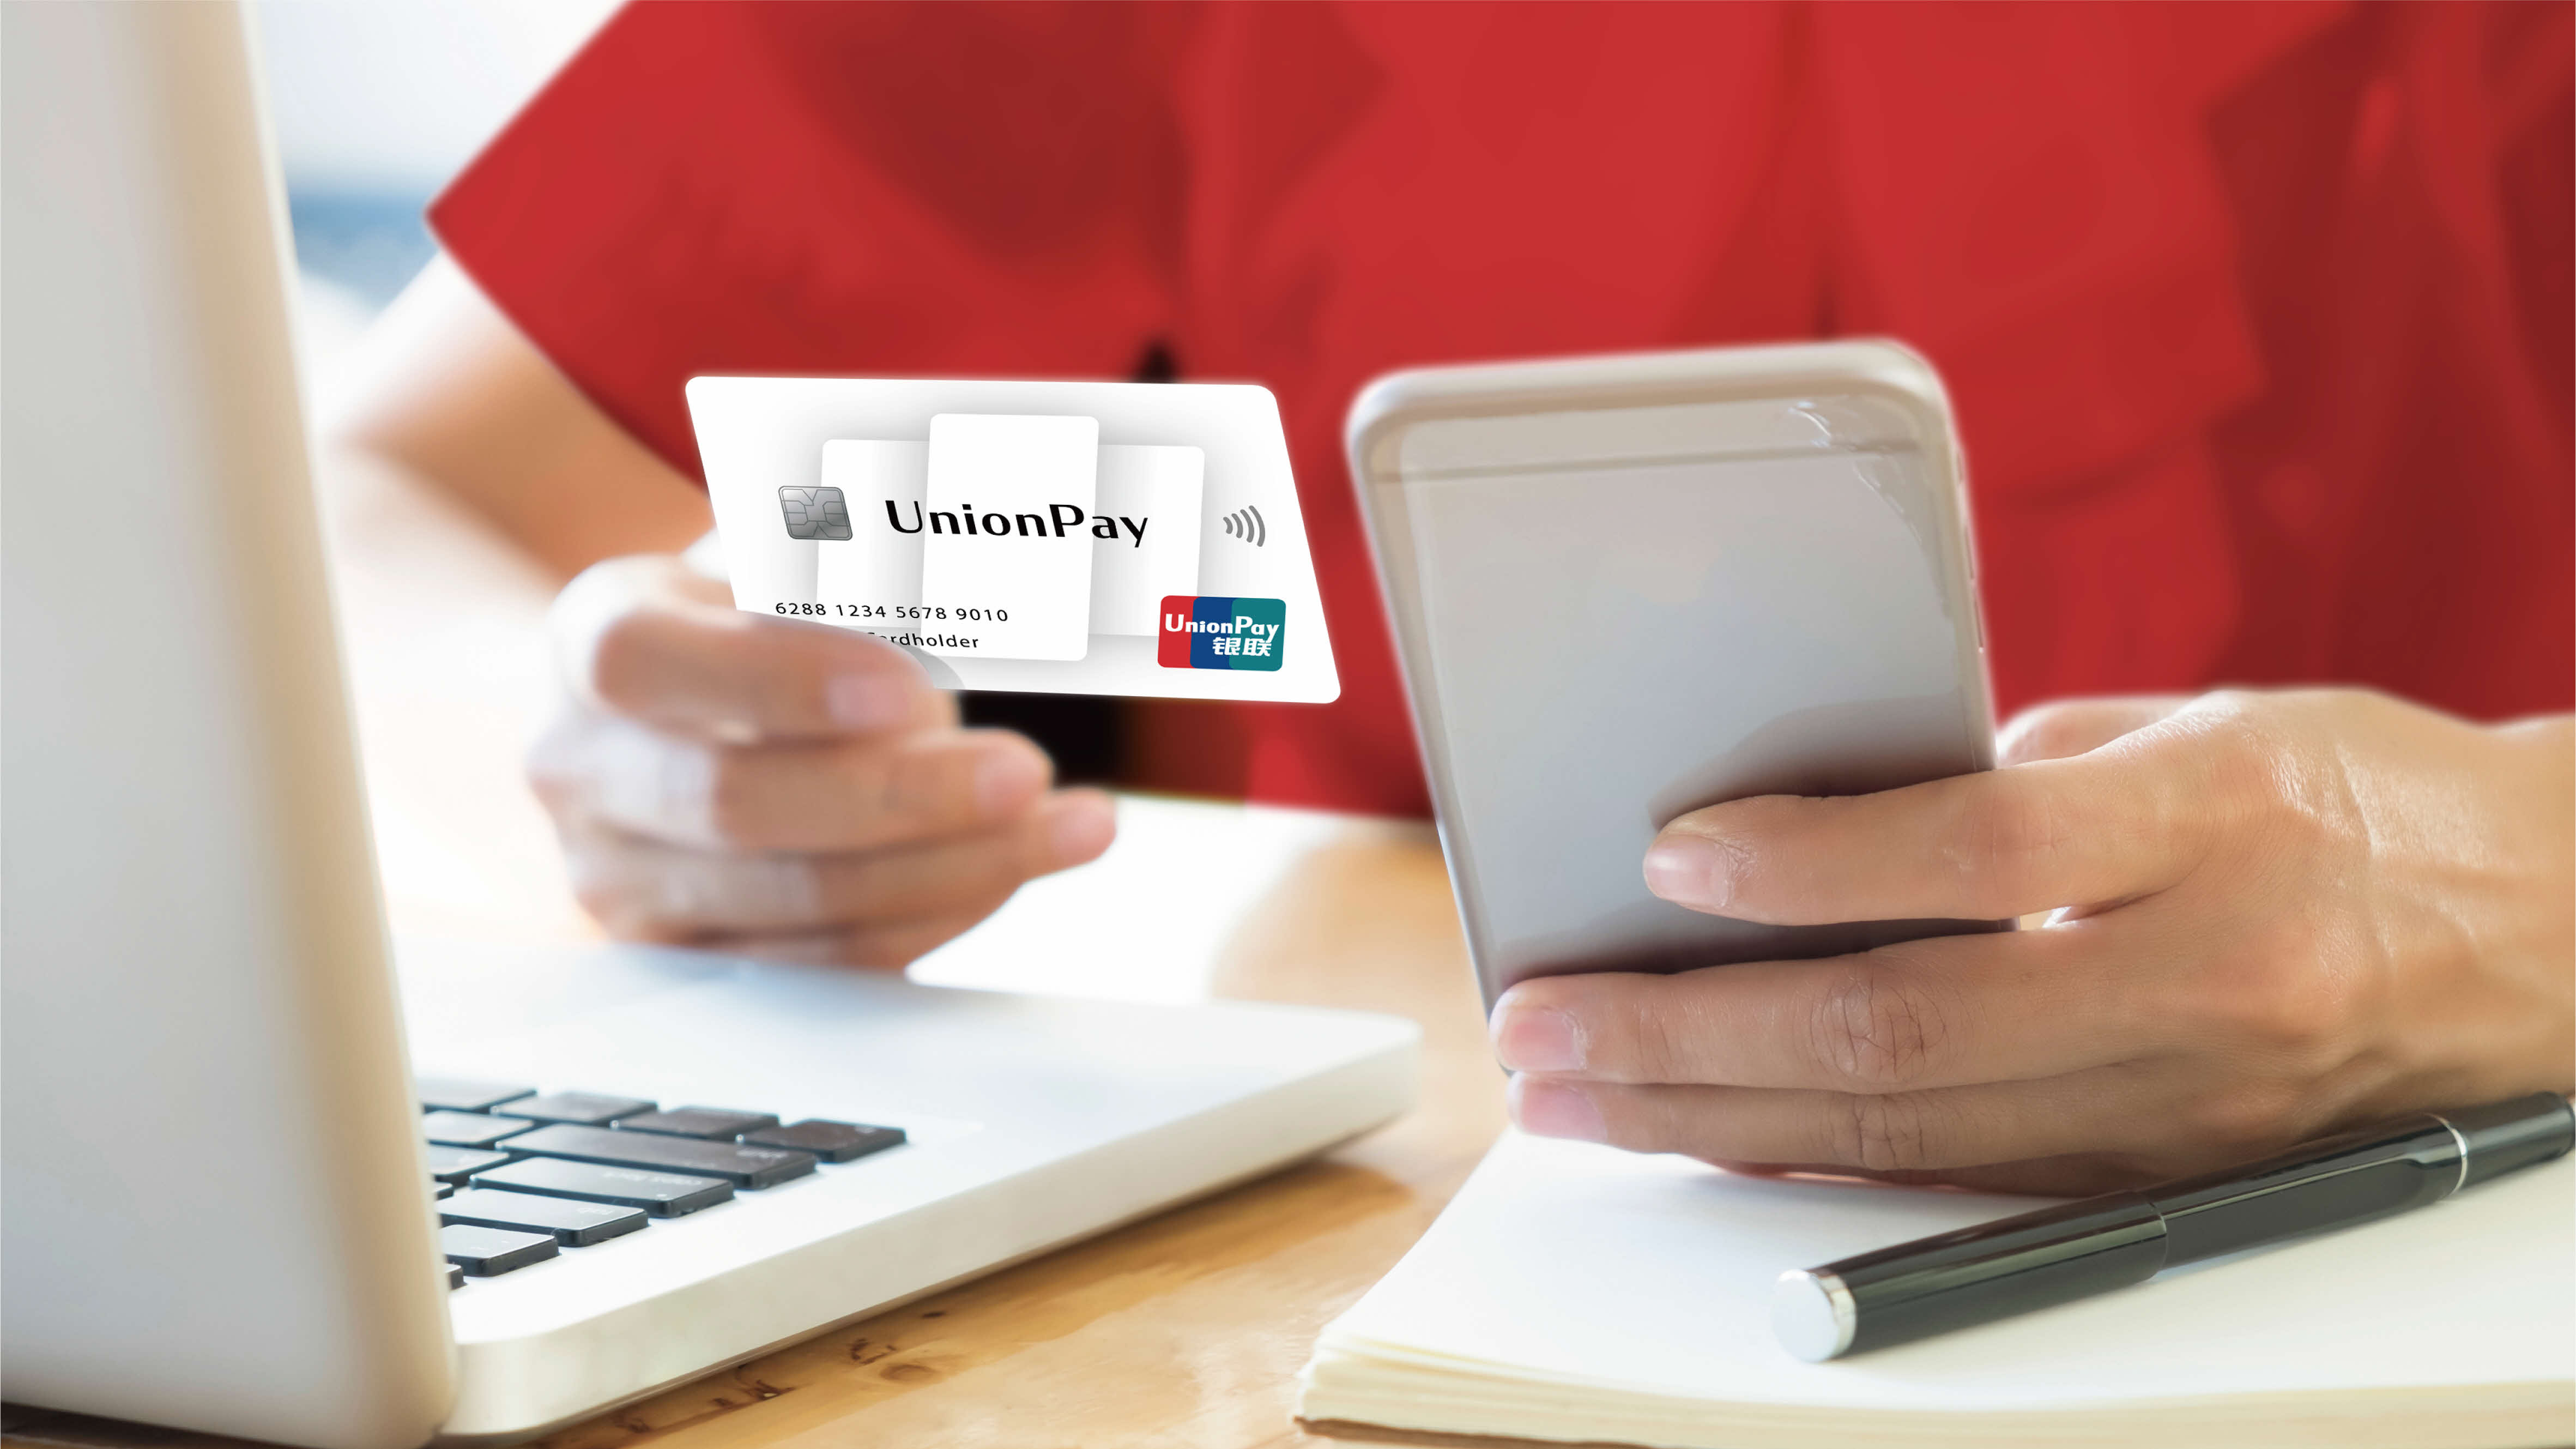 DBS UnionPay Platinum Debit Card